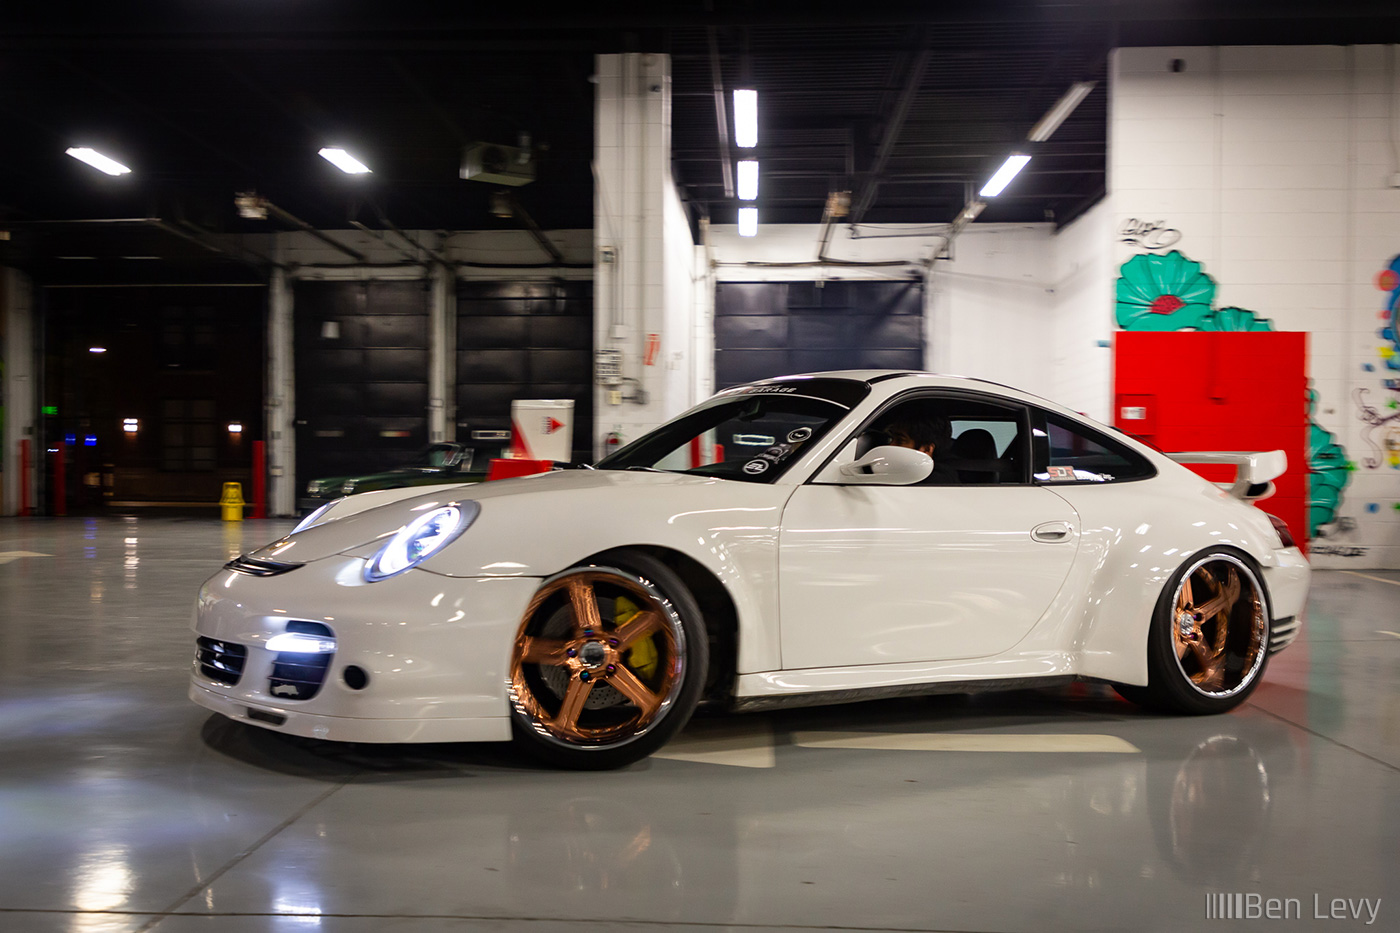 White Porsche 911 at Lowend Takeover